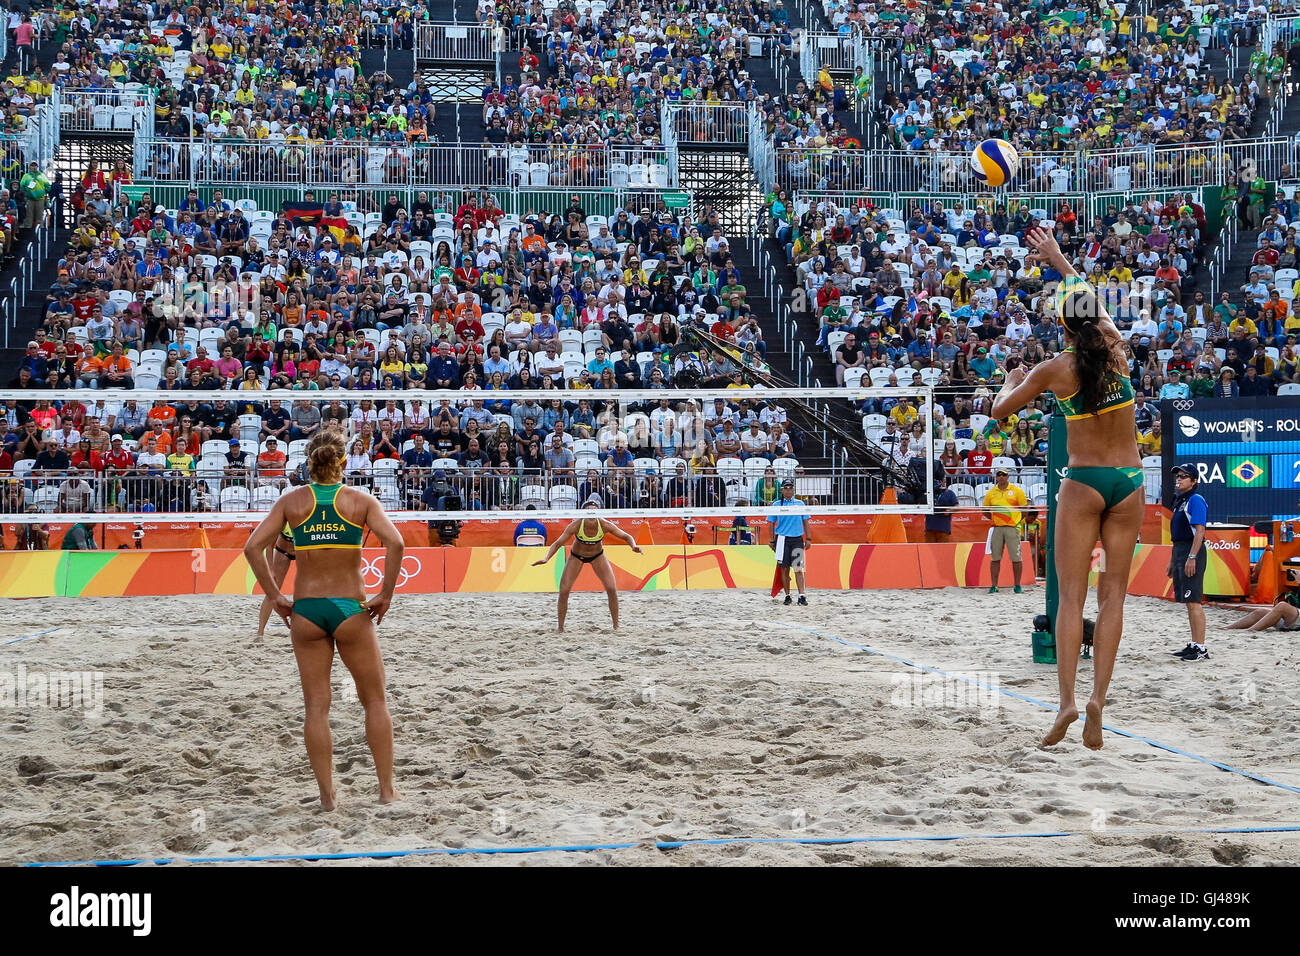 verraad Vergelijking calorie Beach volleyball arena hi-res stock photography and images - Alamy